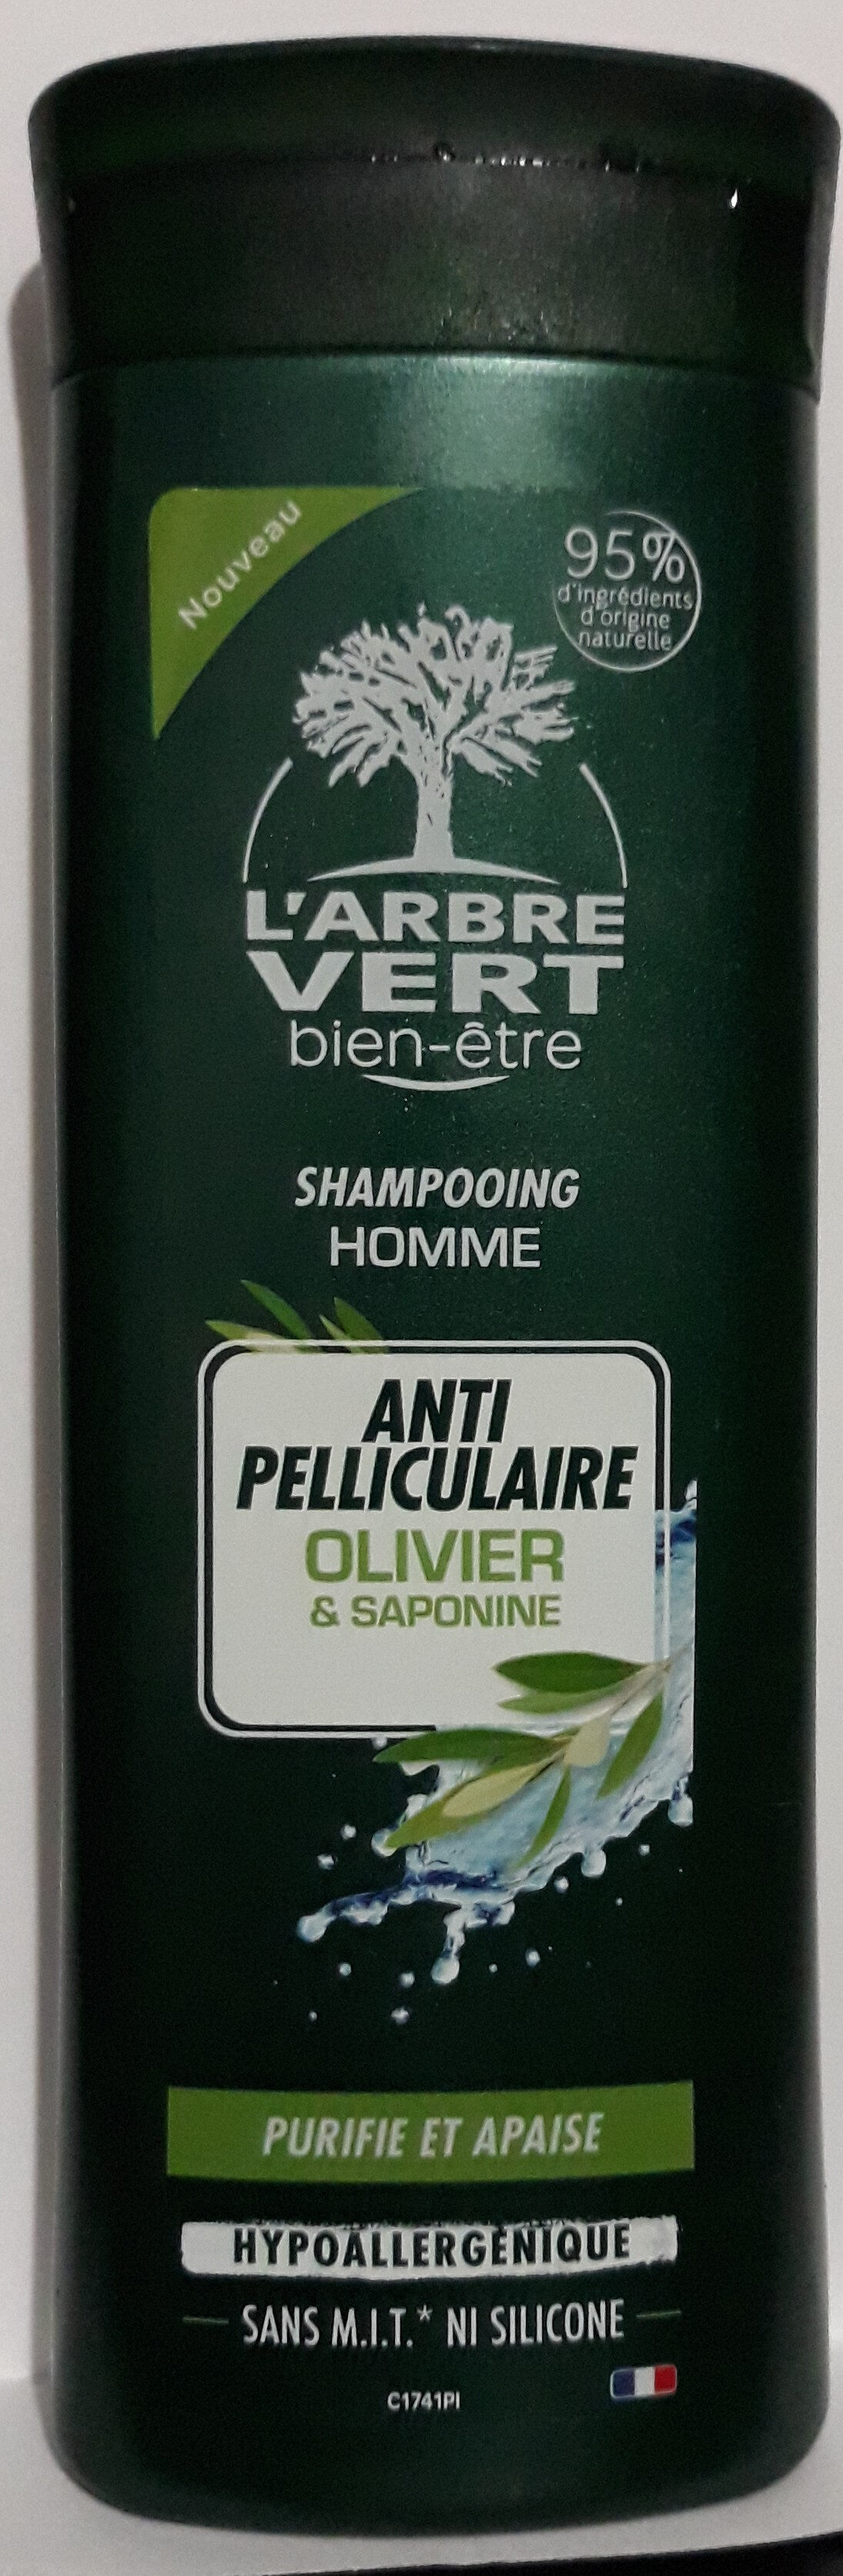 shampooing homme anti pelliculaire olivier & saponine - Produkt - fr